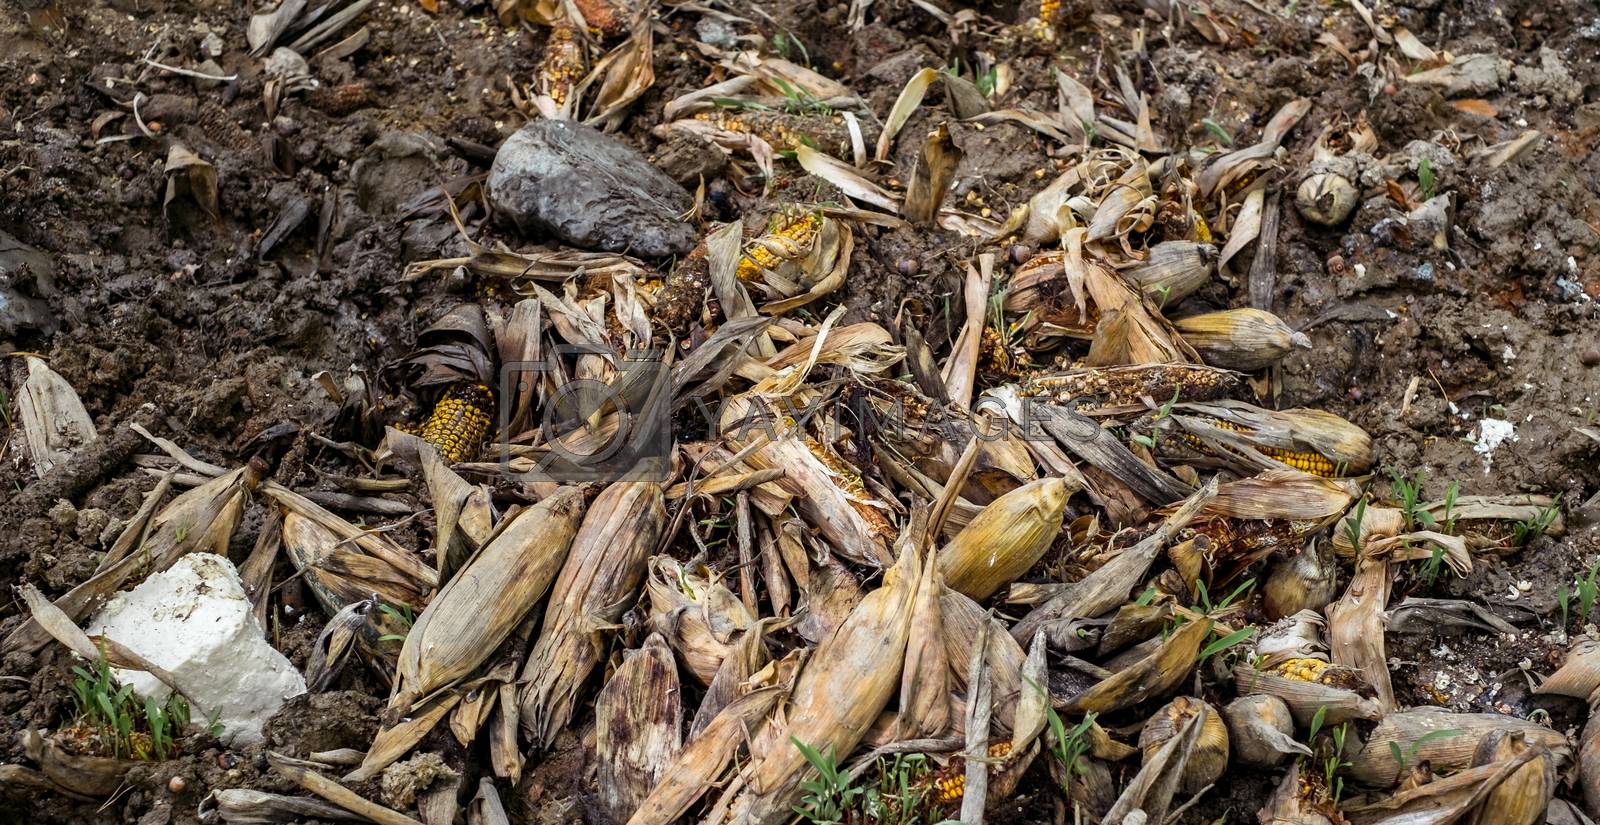 Royalty free image of waste of food, left behind corncob in the mud by Roberto